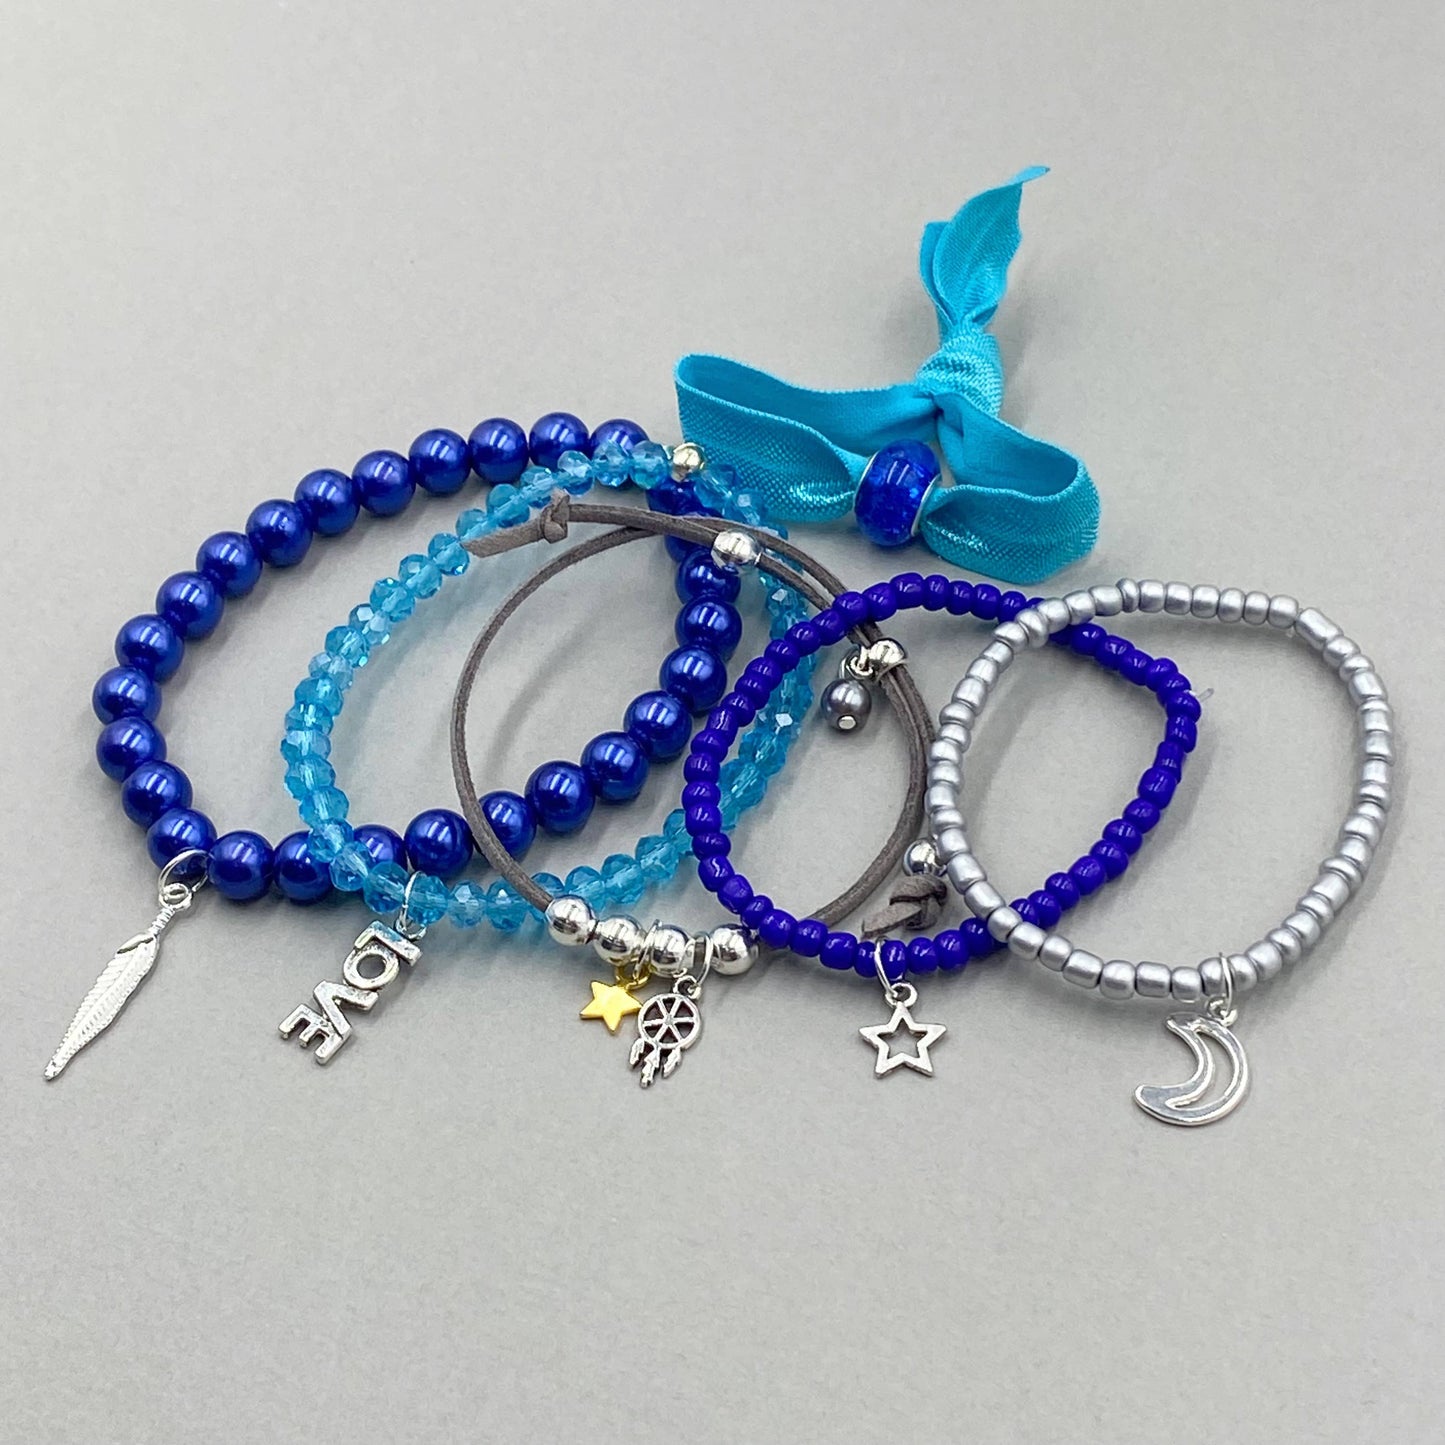 Denim Inkdrop Bracelet Making Kit for Teens/Adults